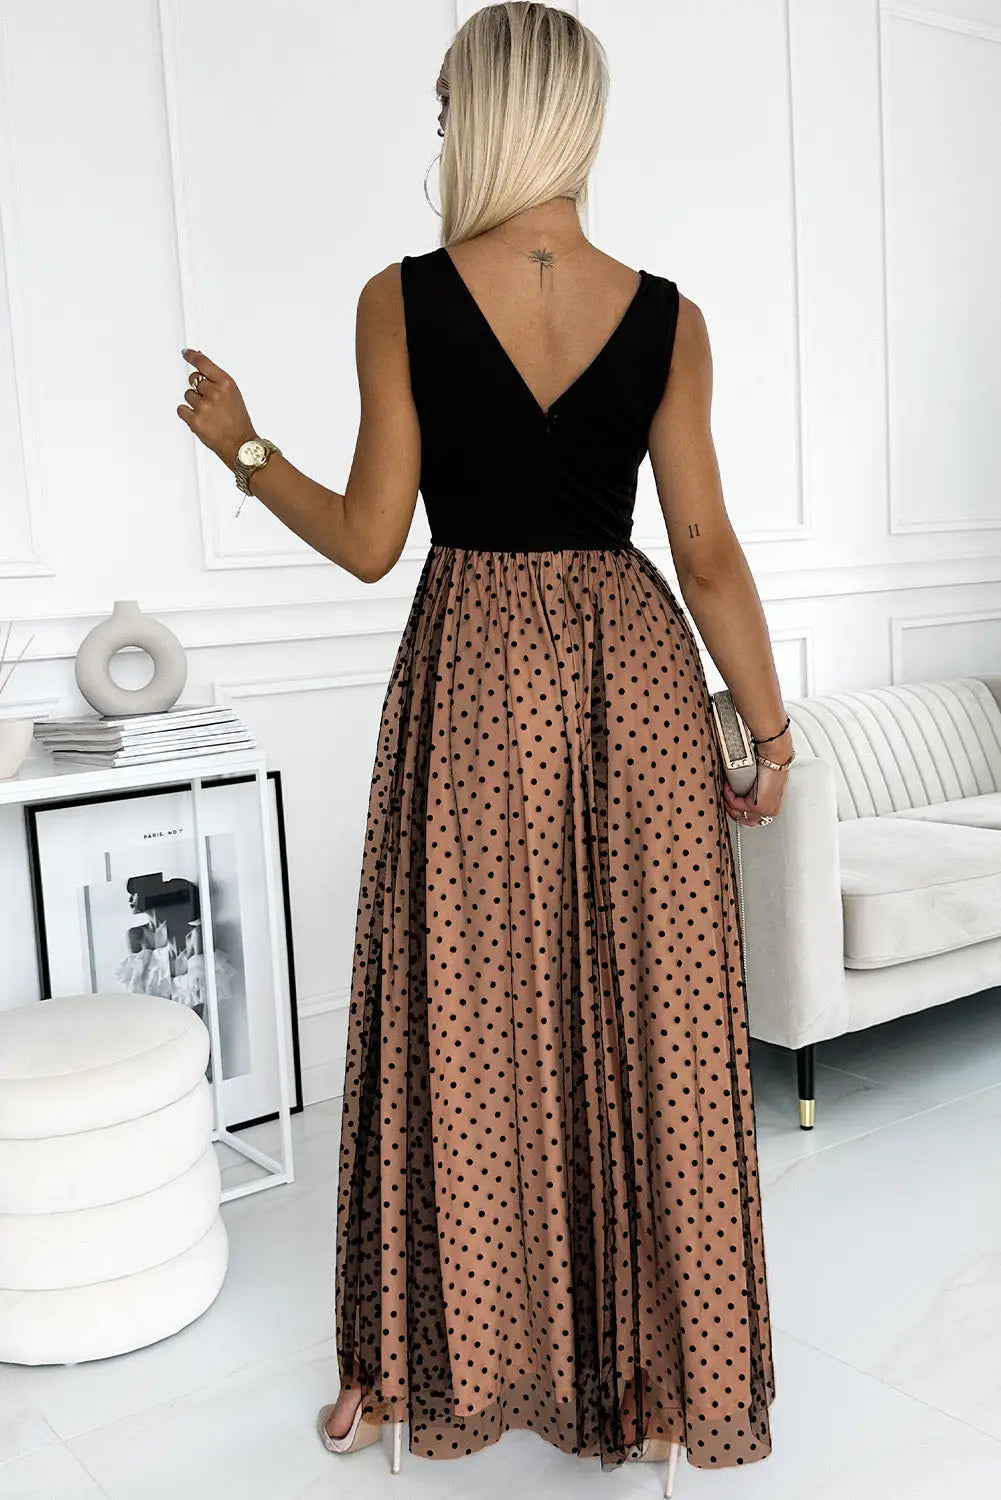 Black polka dot mesh overlay sleeveless maxi dress - dresses